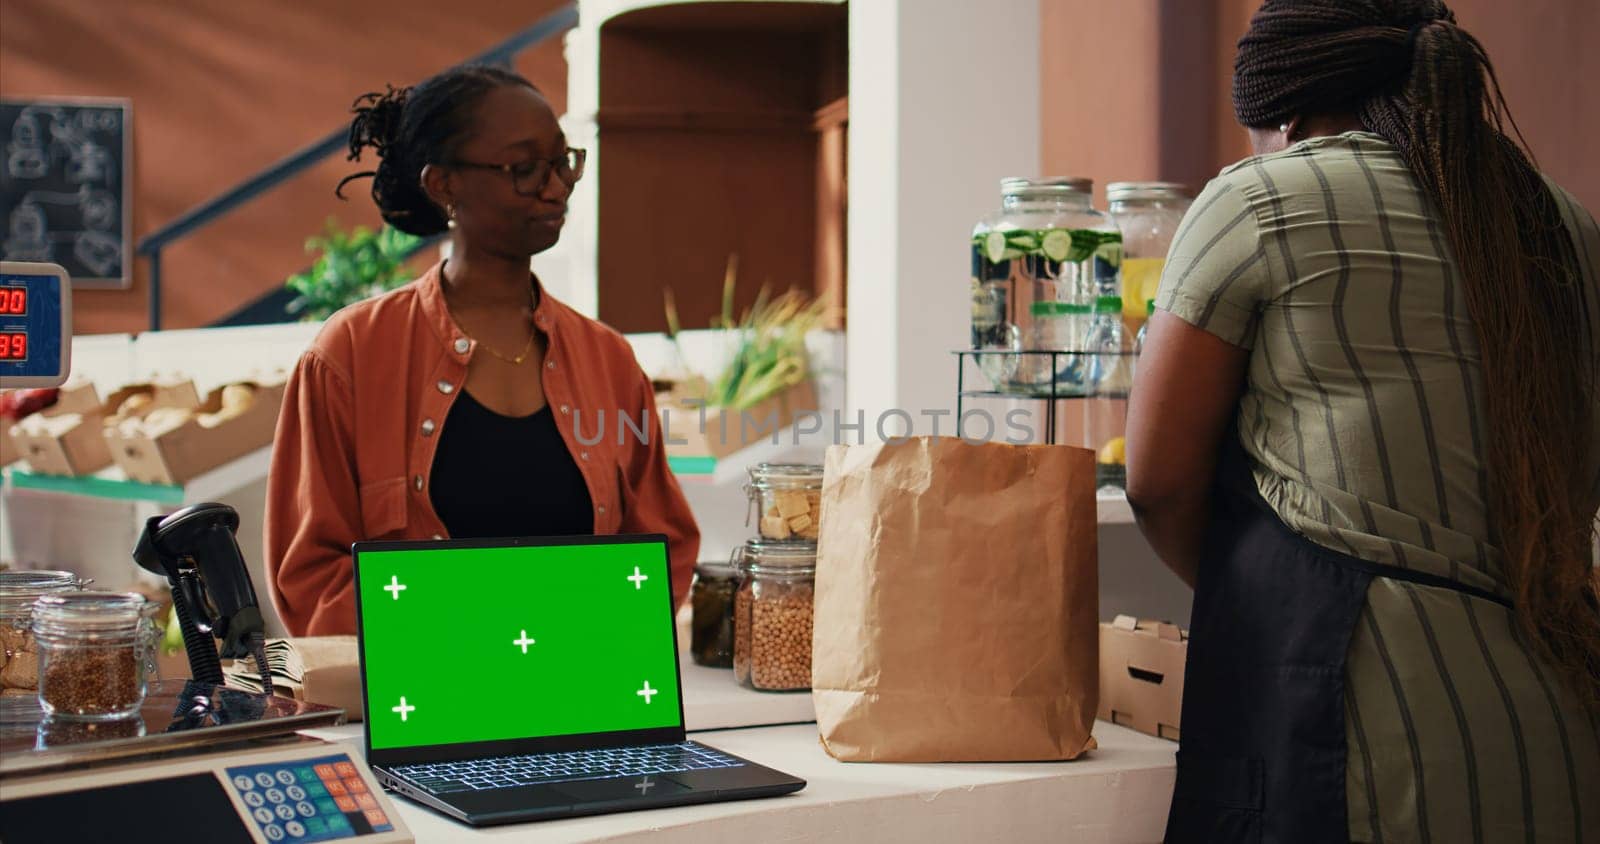 Retailer having laptop that shows greenscreen on display by DCStudio